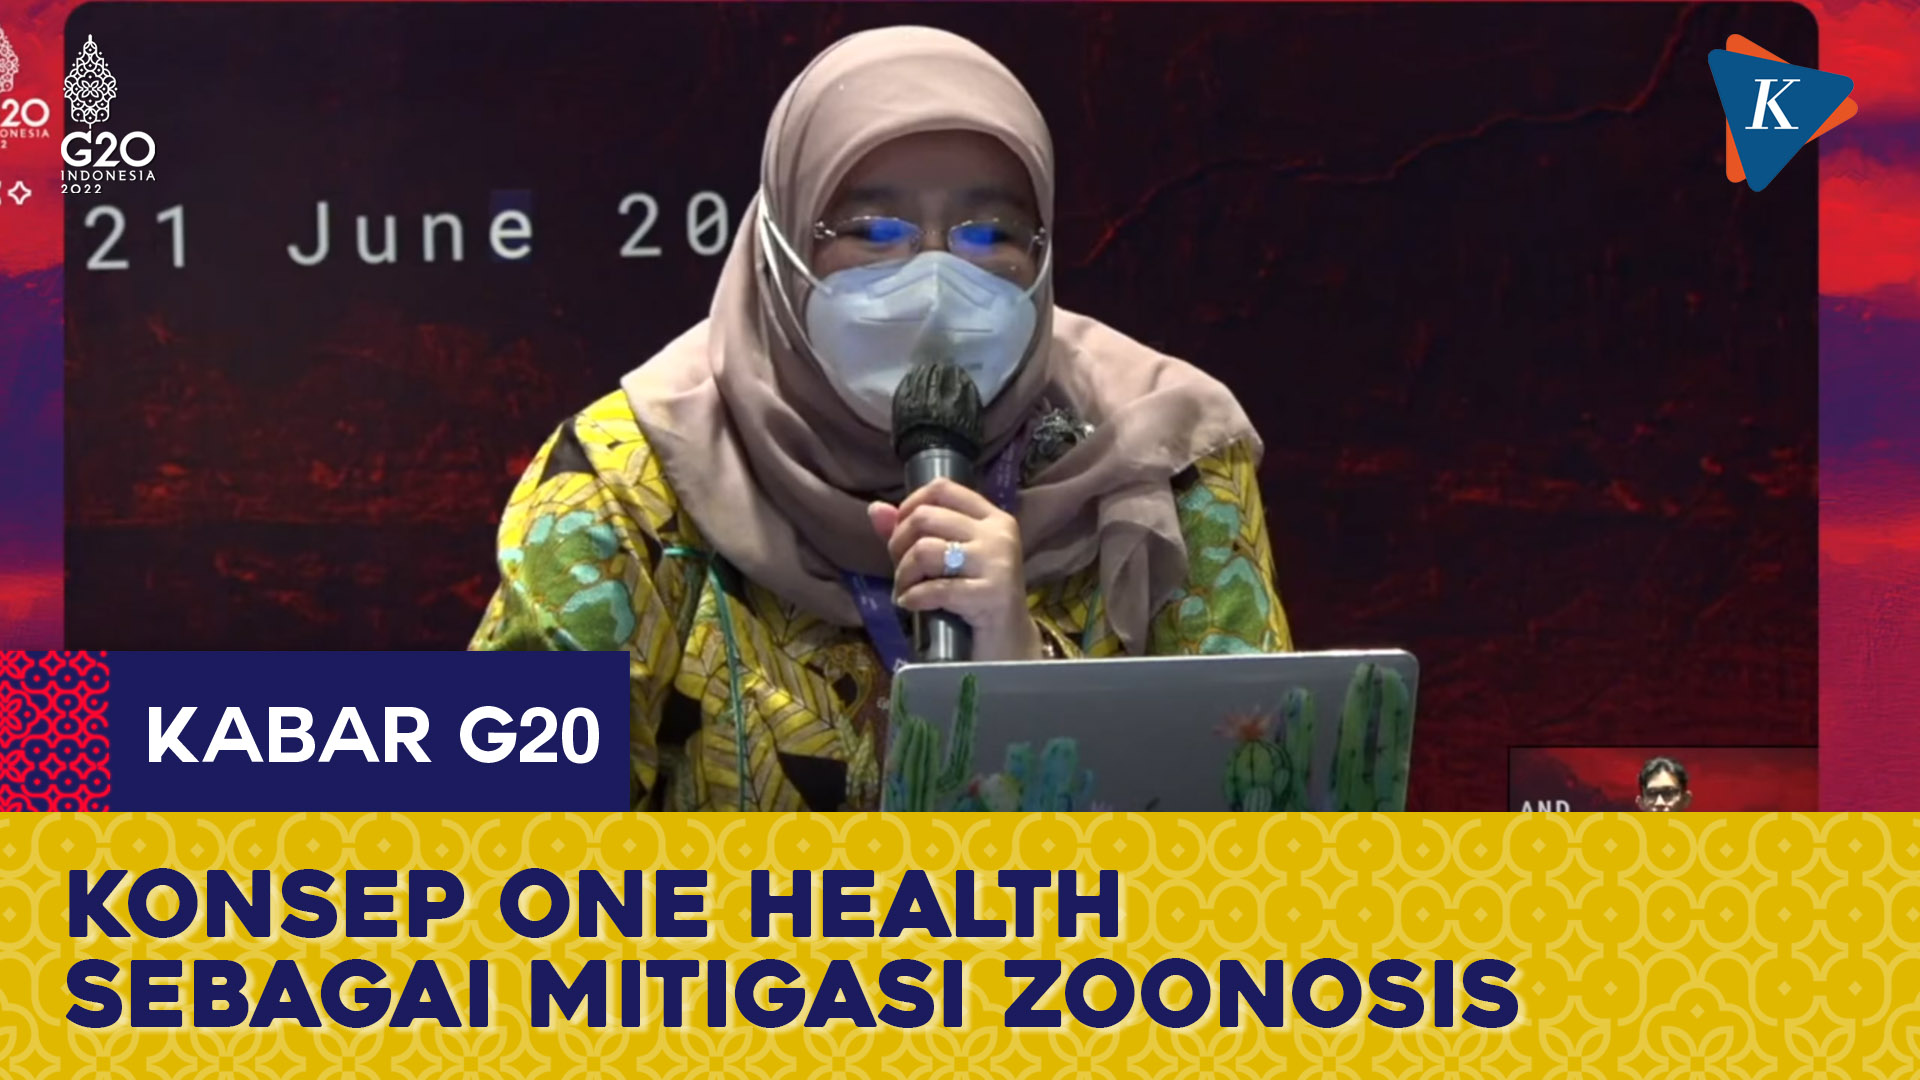 Komitmen One Health G20 untuk Antisipasi Penyakit Zoonosis